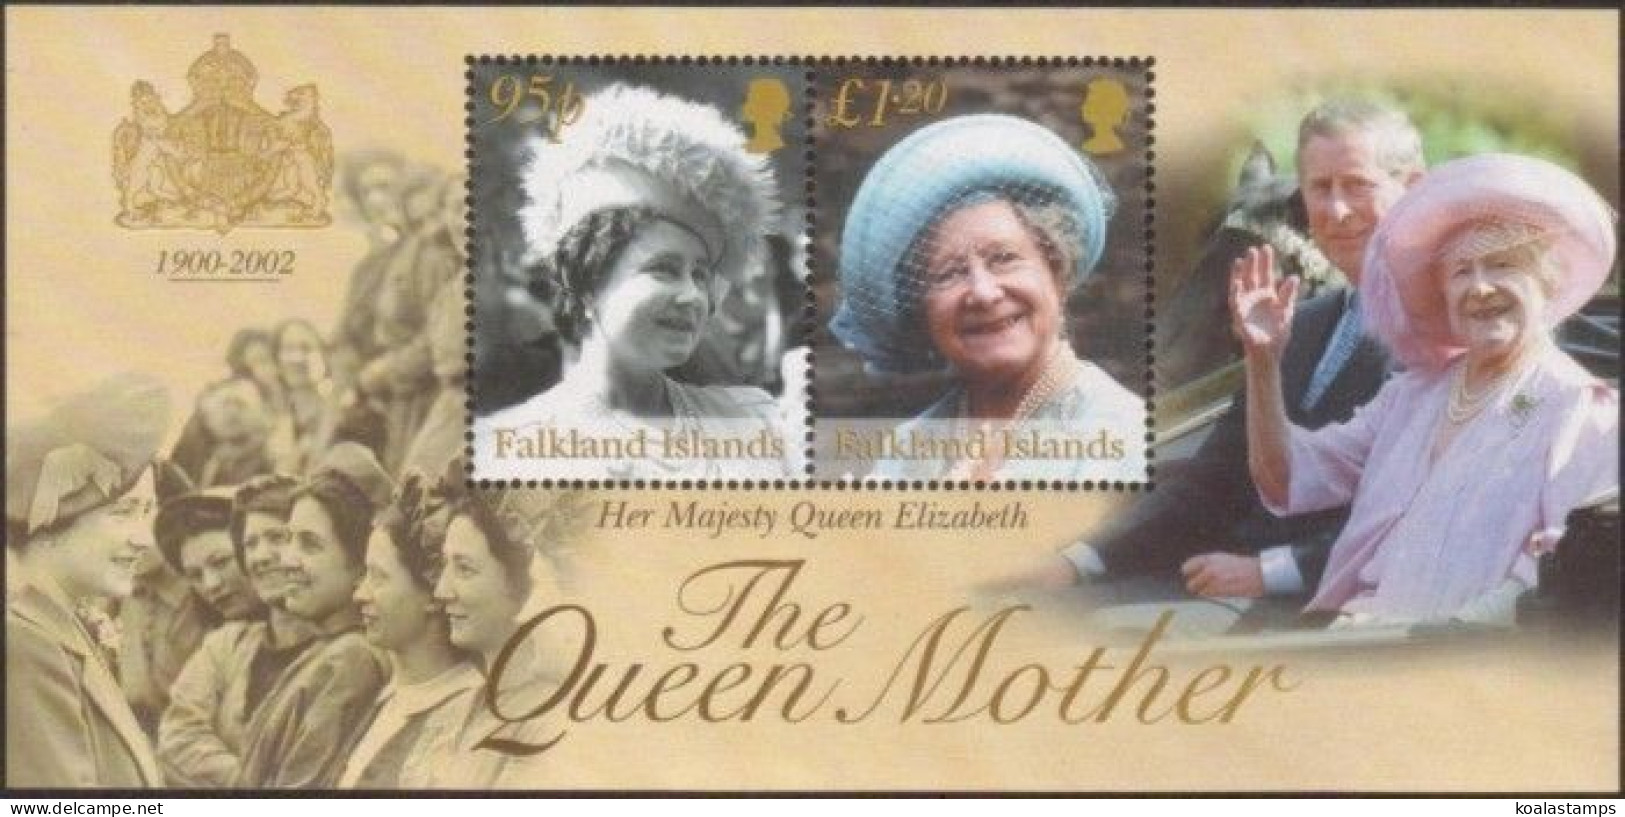 Falkland Islands 2002 SG936 The Queen Mother MS MNH - Falkland